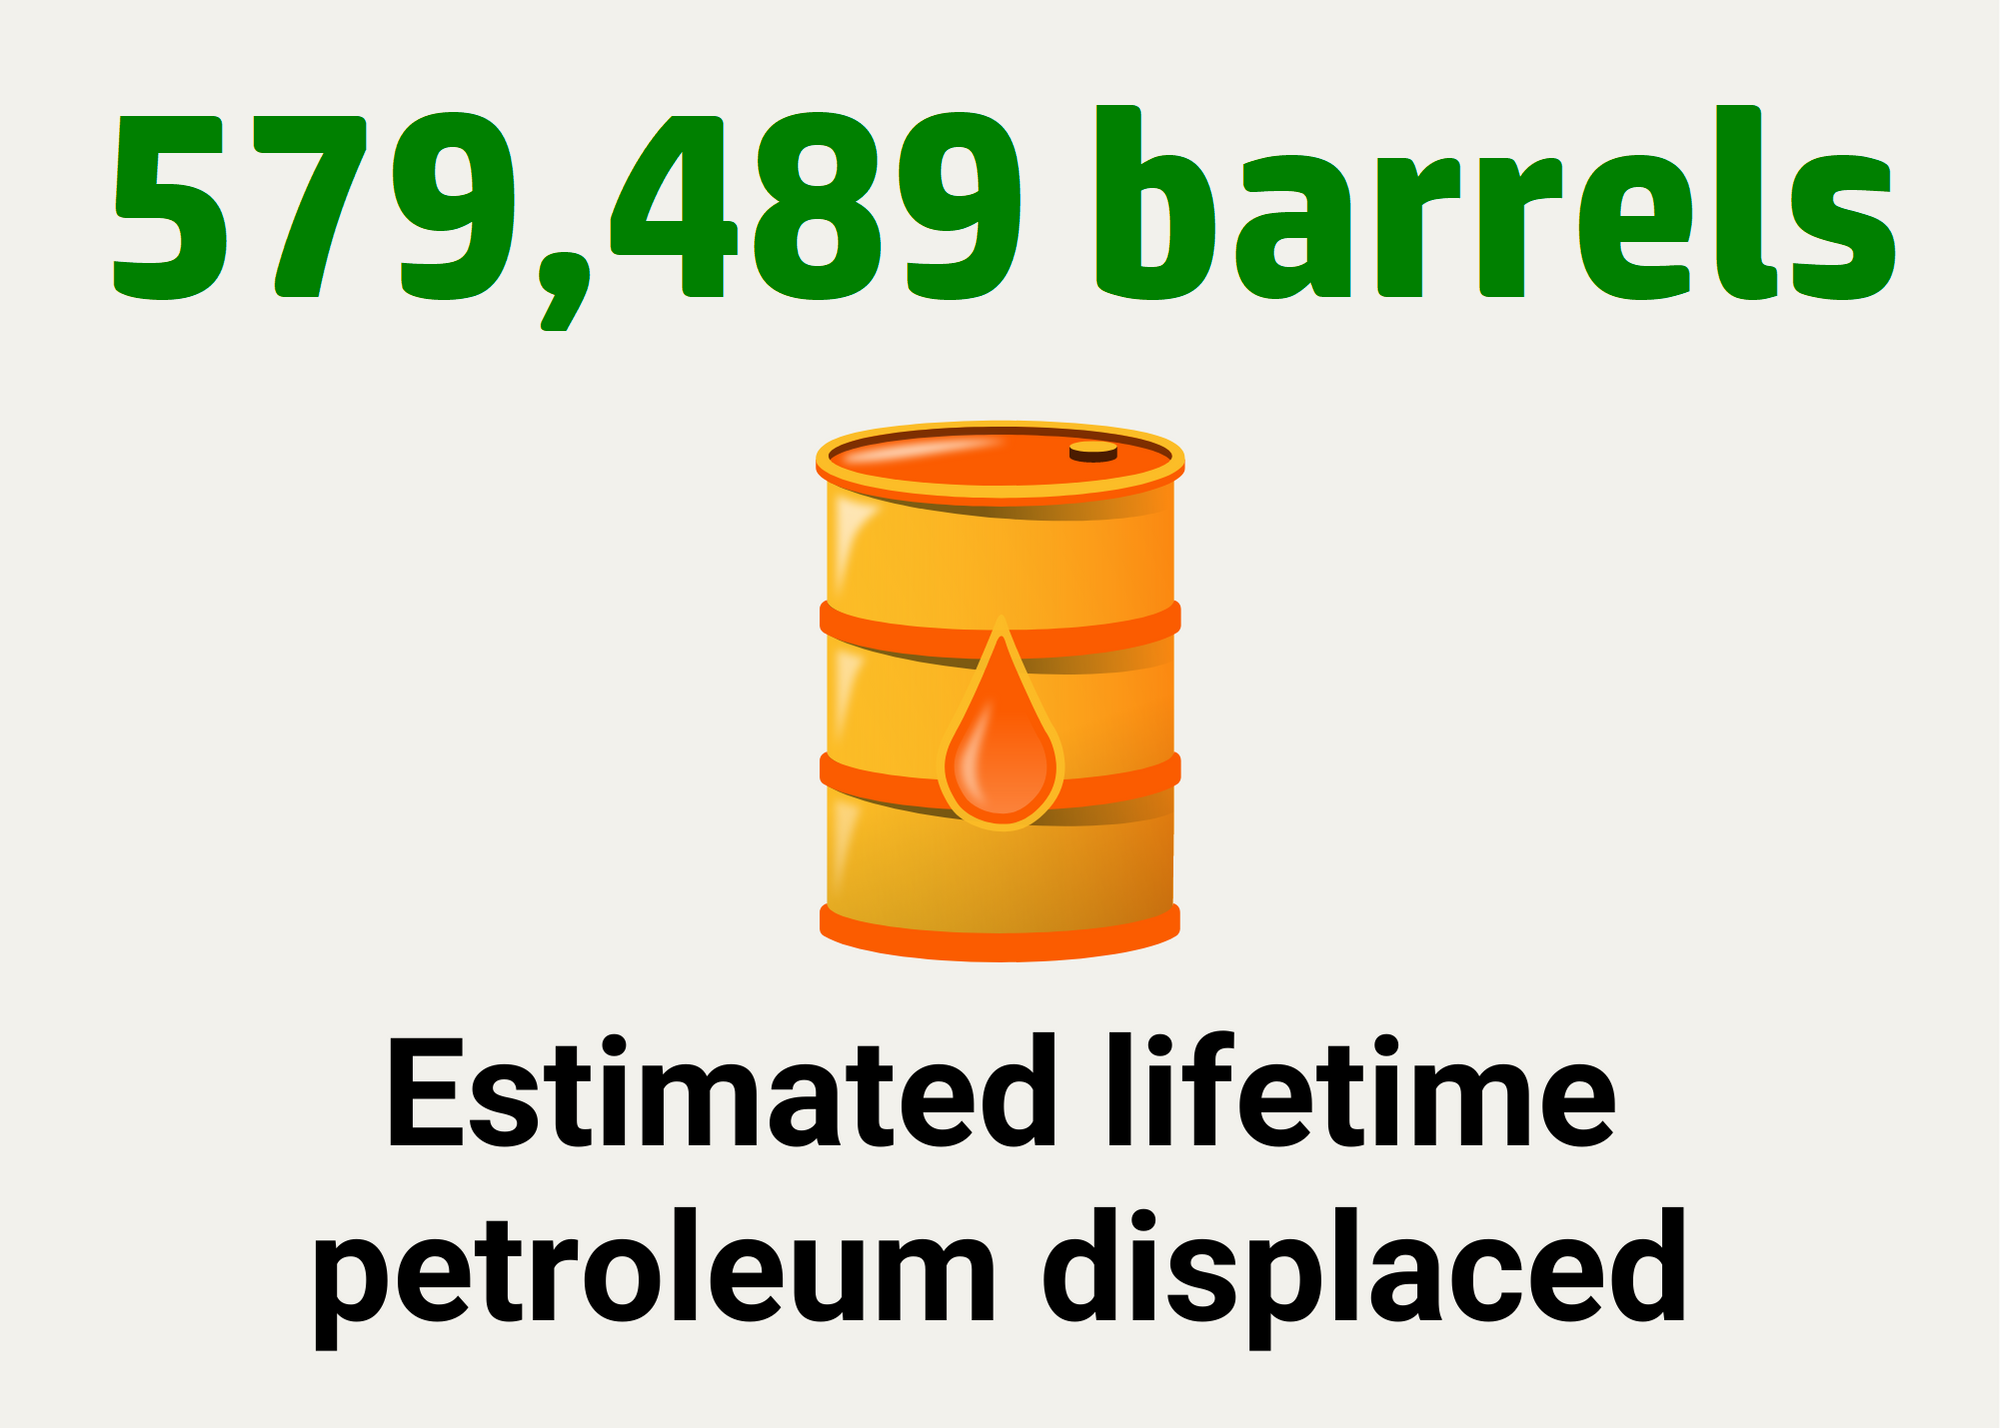 Estimated lifetime petroleum displaced: 579,489 barrels